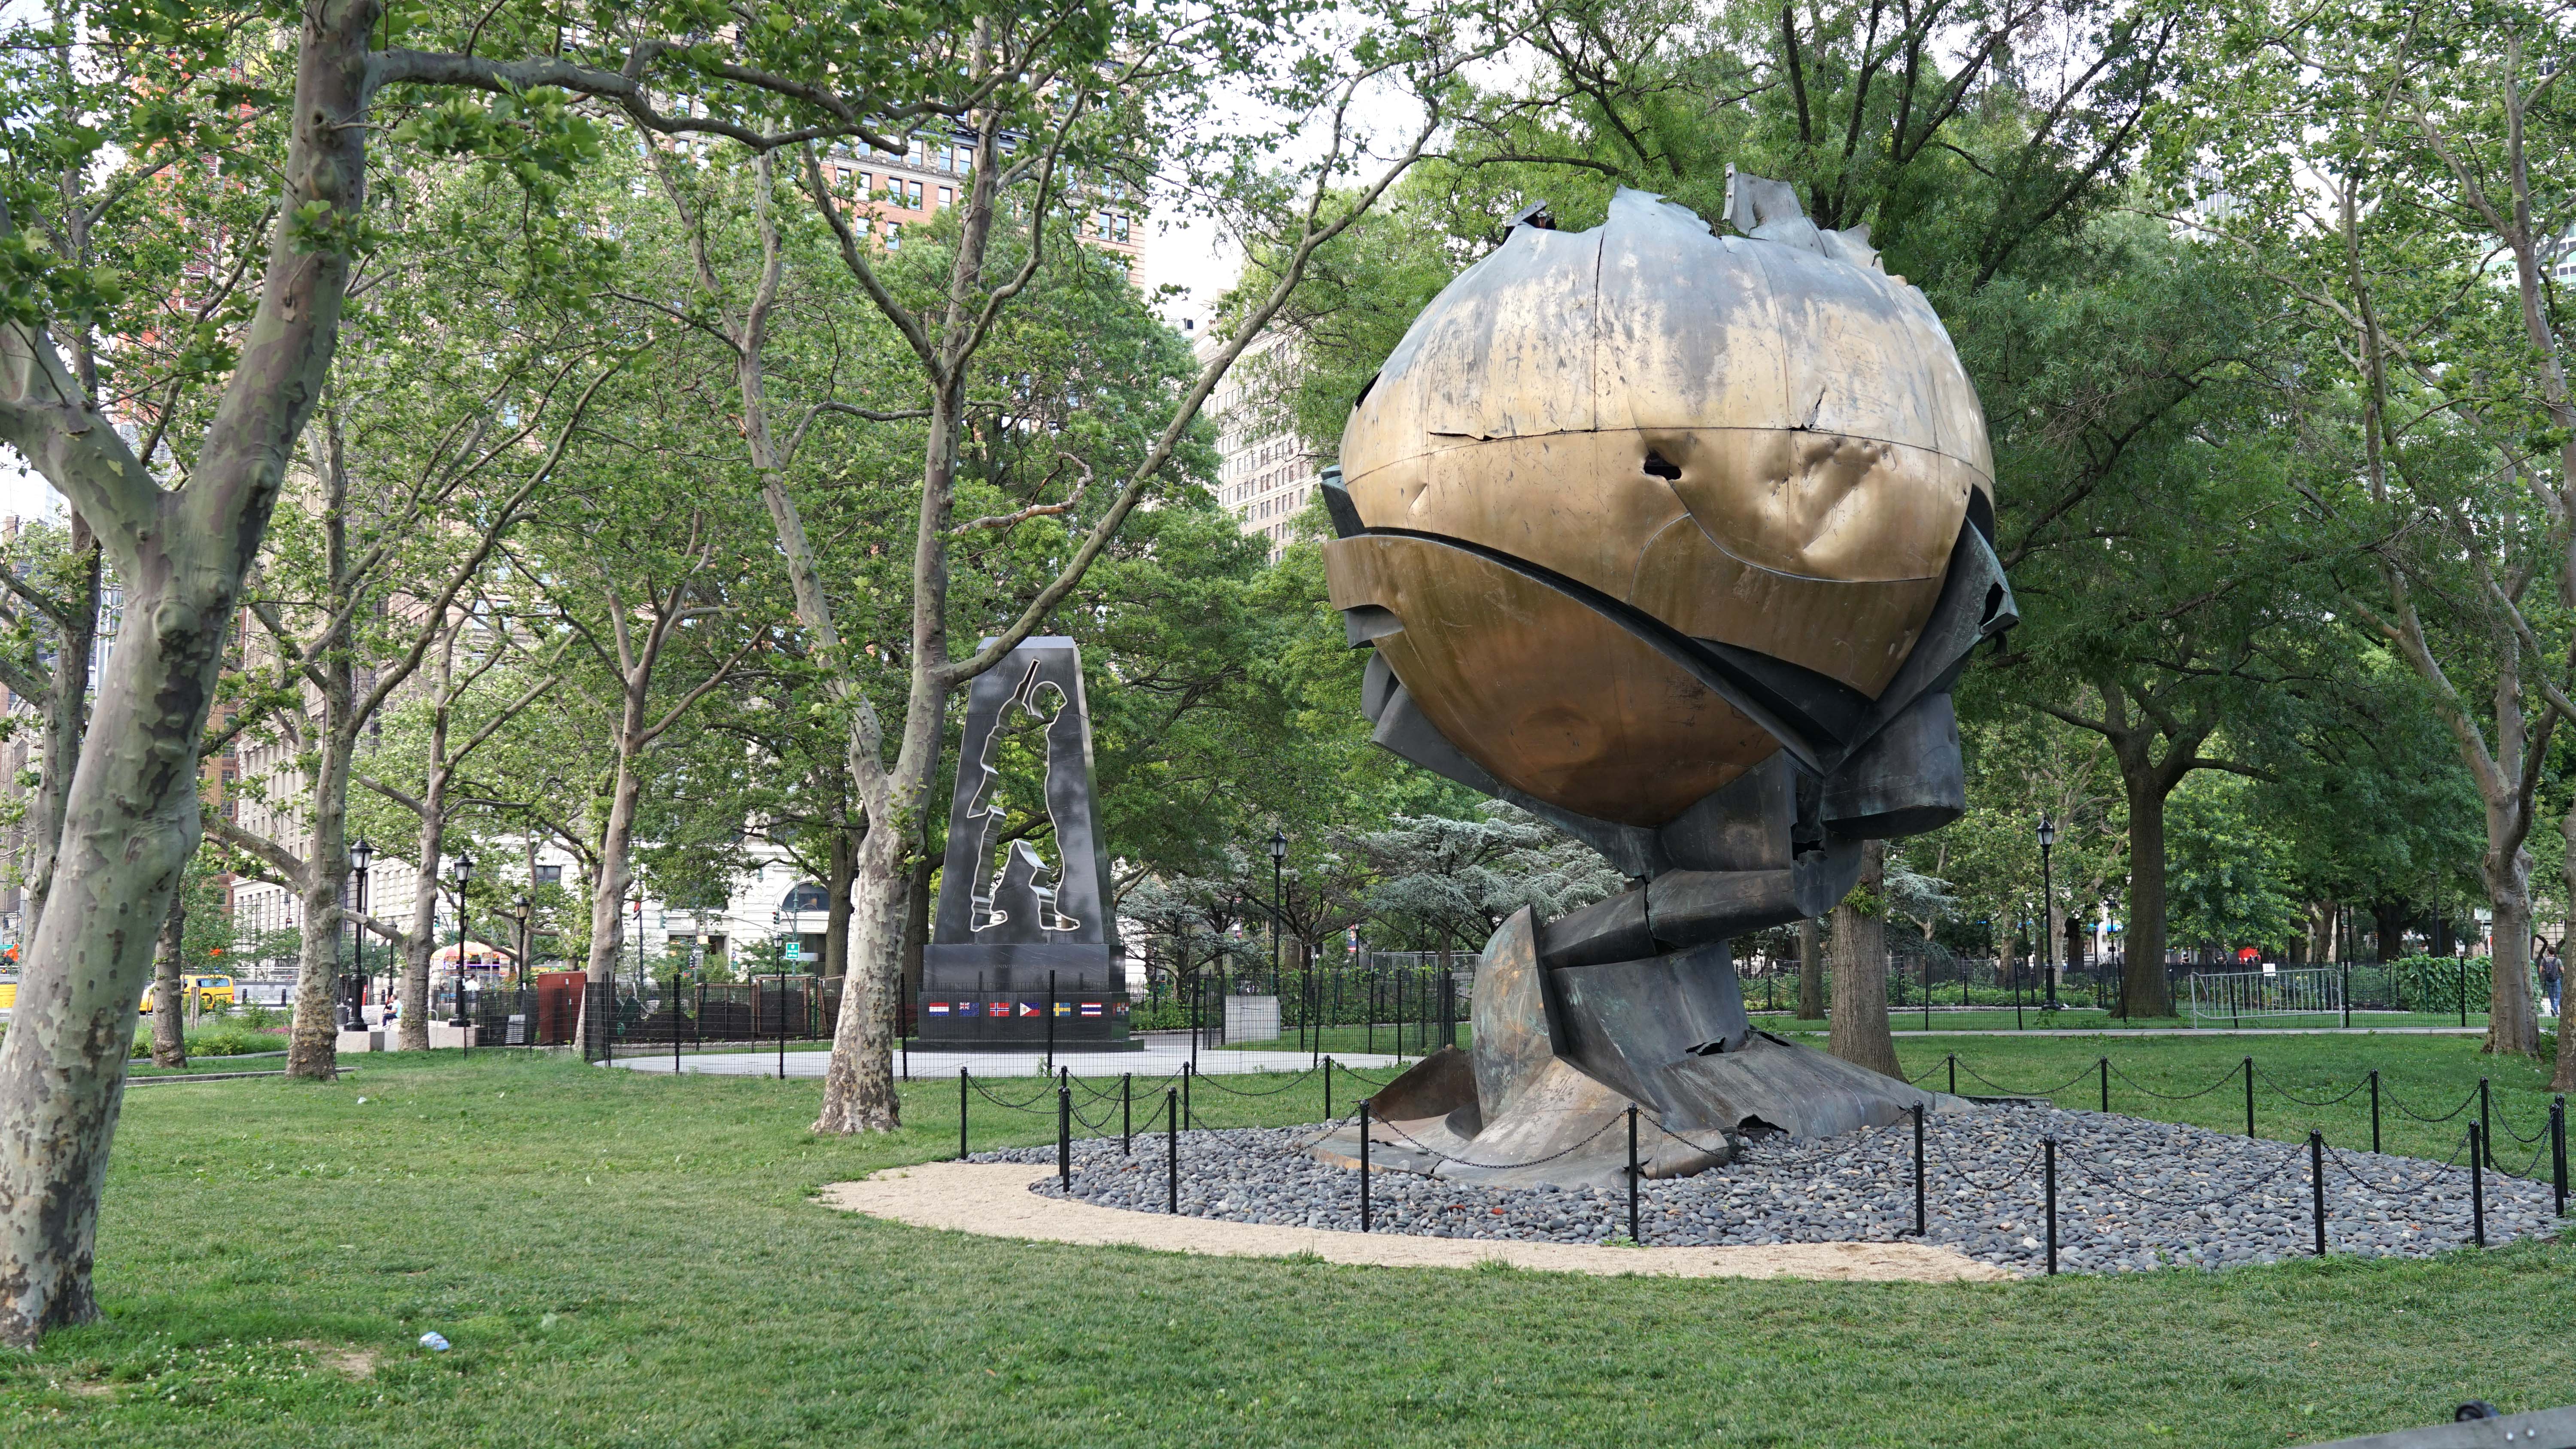 WTC sphere and Vietnam memorial